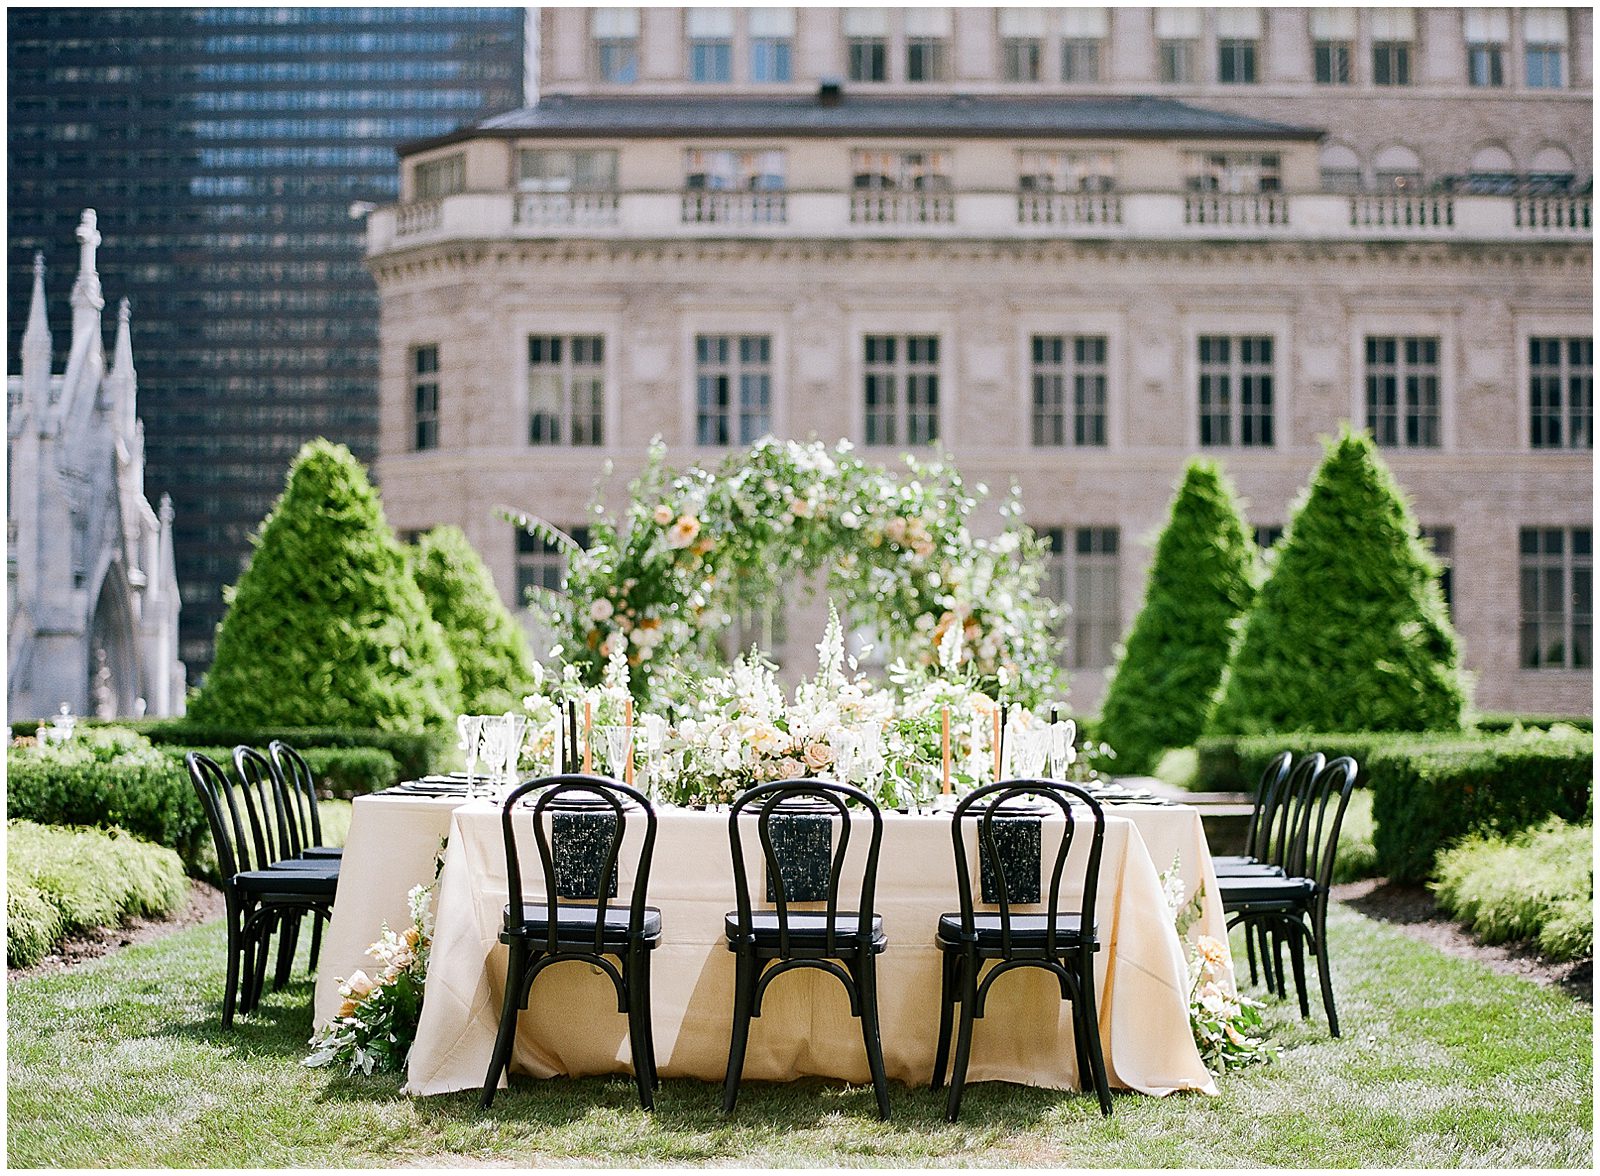 New York City Wedding Venue 620 Loft and Gardens Wedding Reception Table Photo